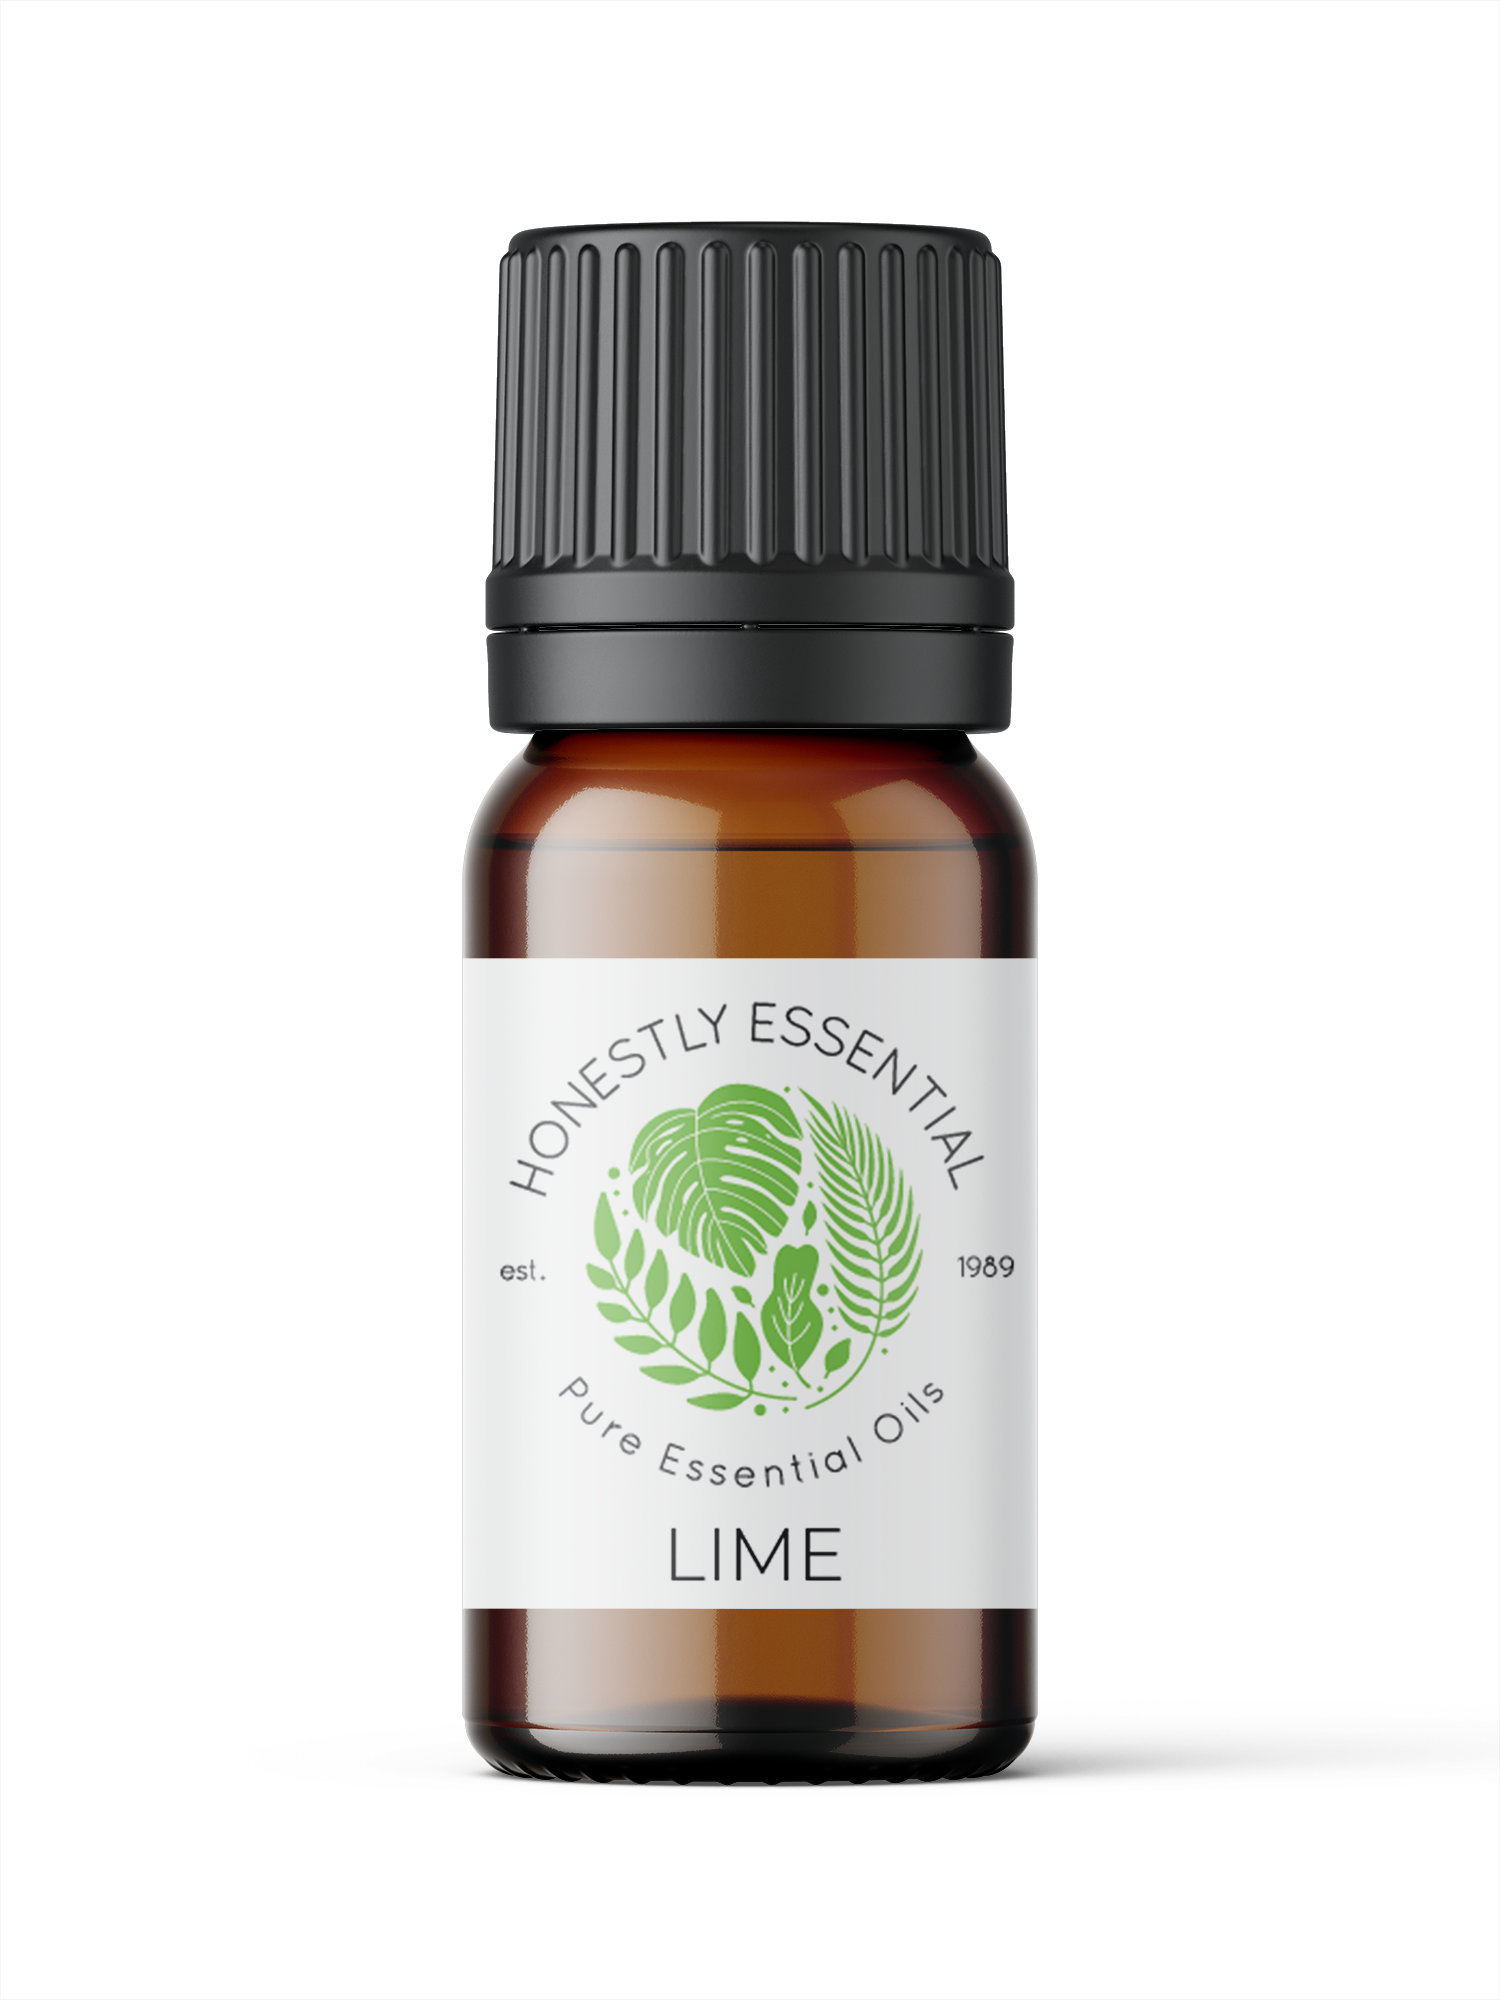 Lime Essential Oil - Essential Oils | Honestly Essential Oils anxiety, citrus, citrus essential oil, digestion, kid safe